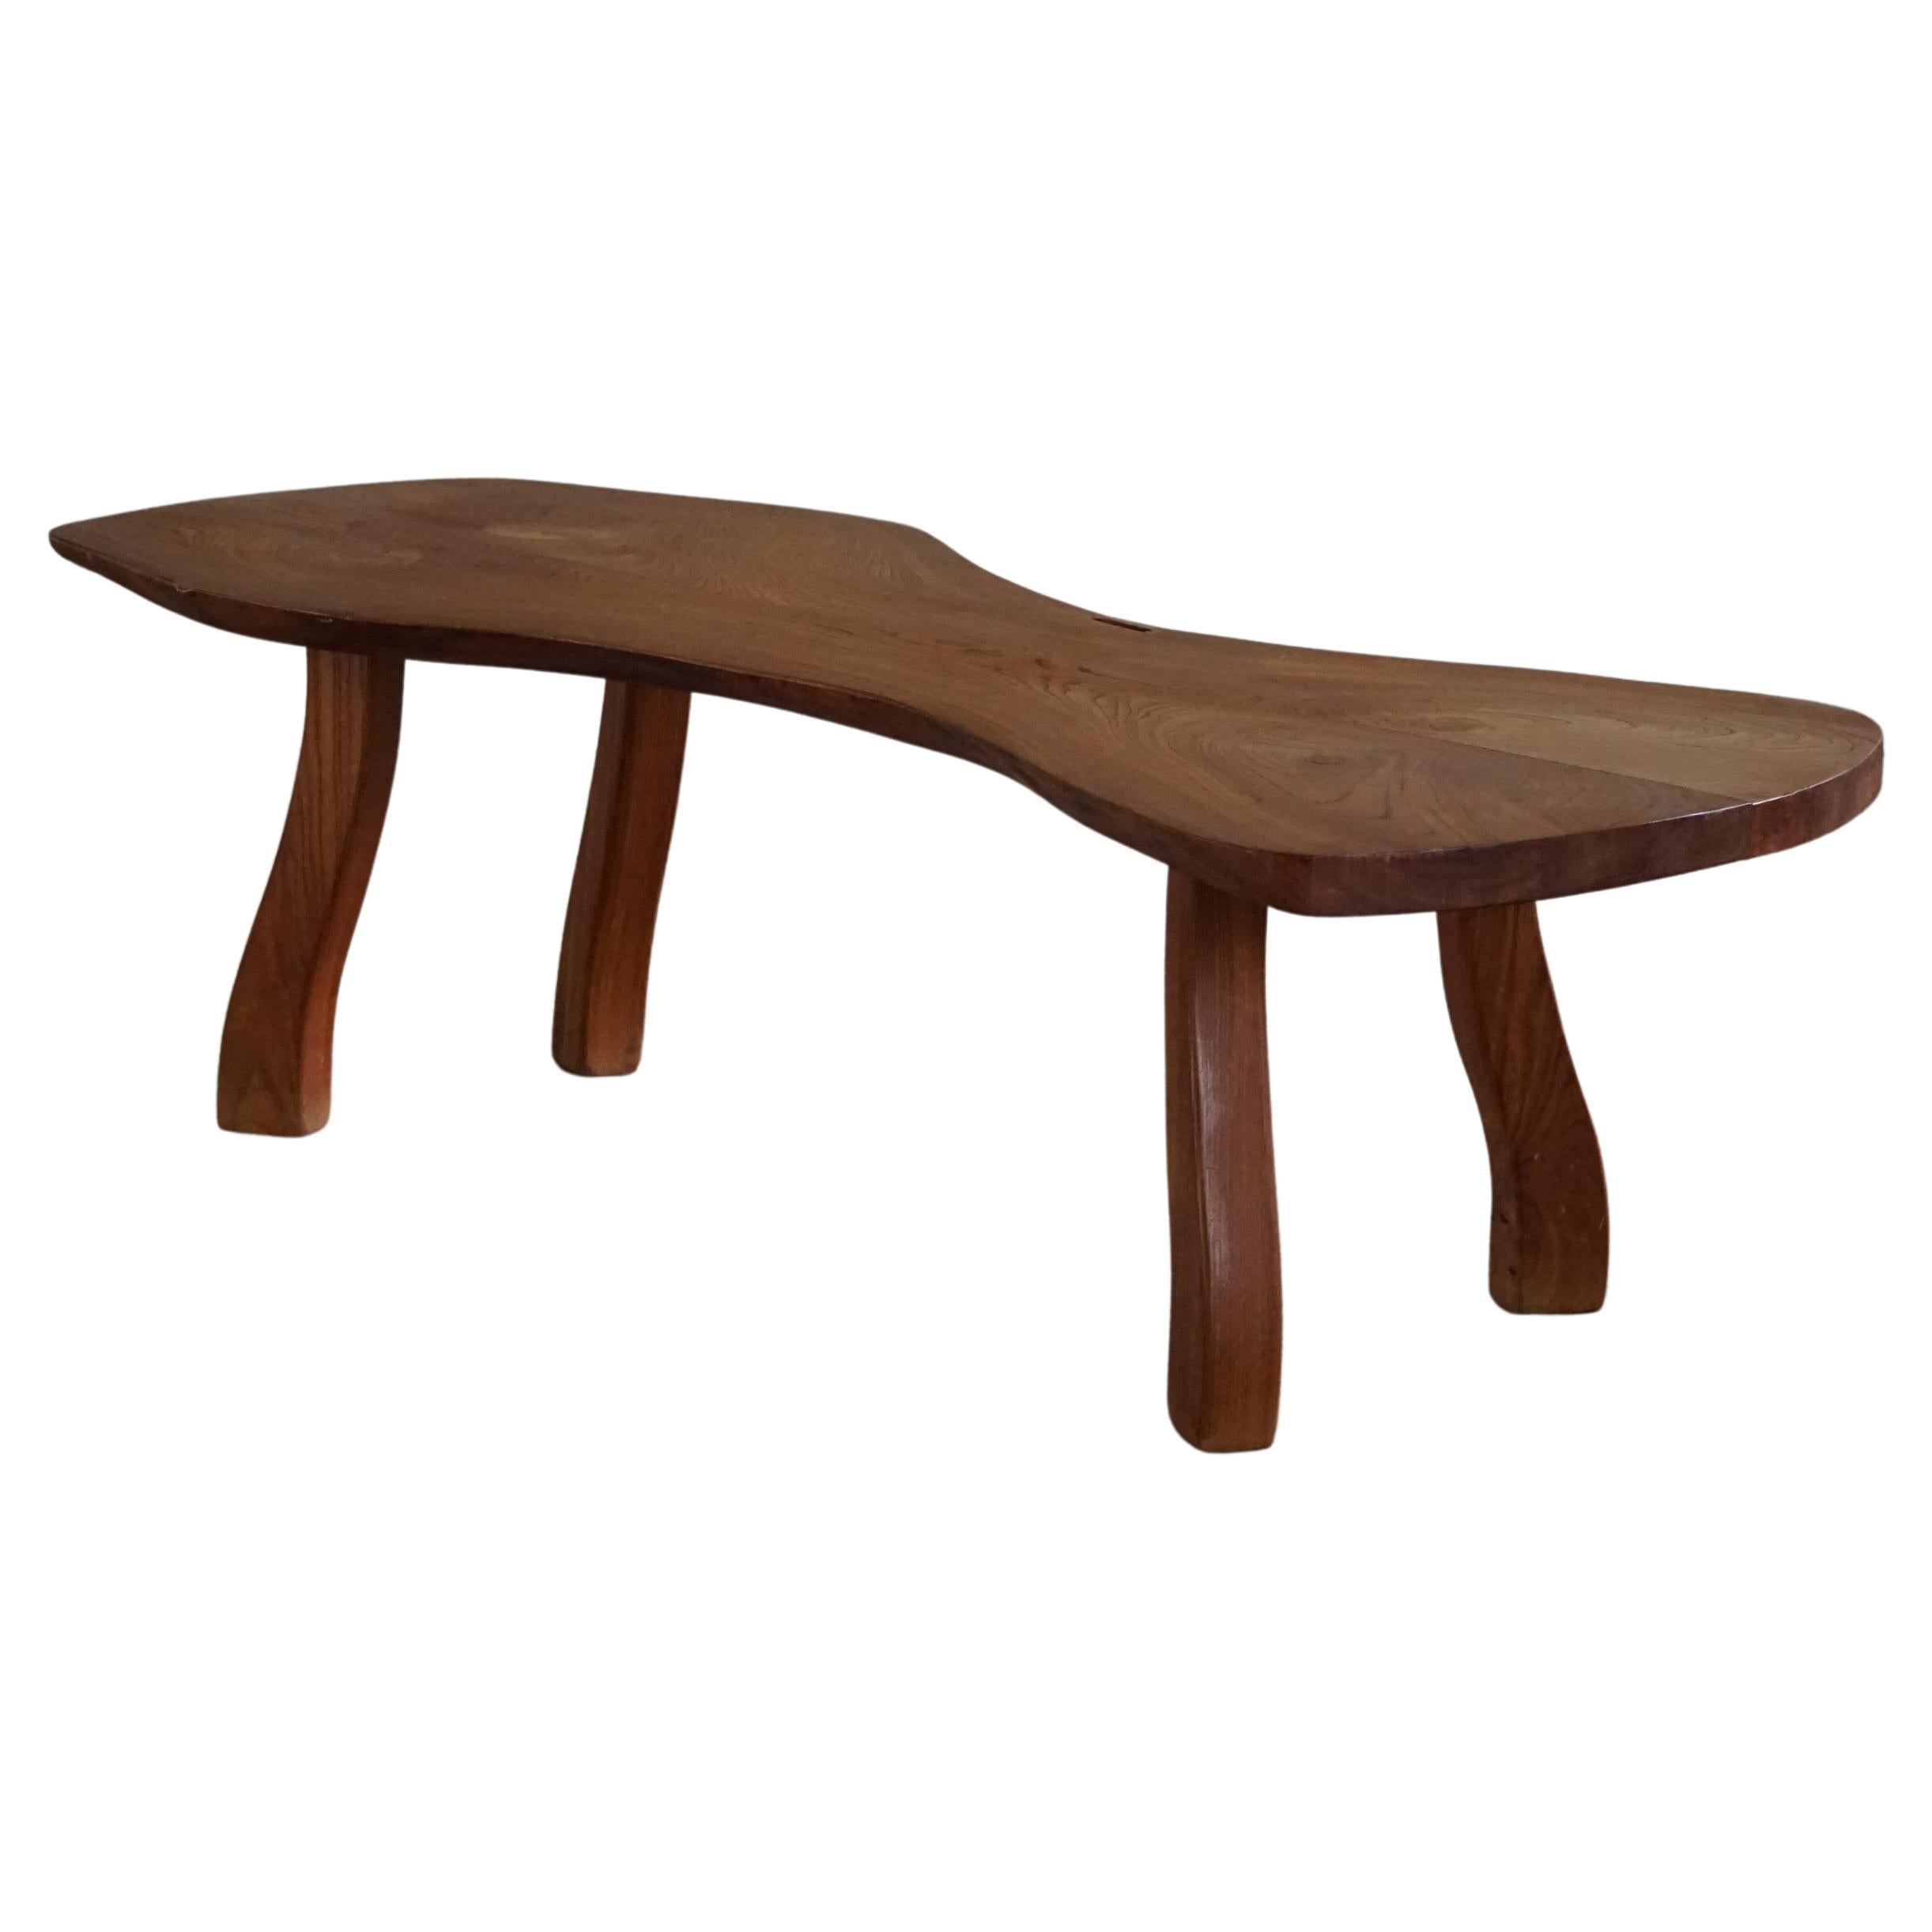 Swedish Modern, Organic Shaped Sofa Table in Elm by Carl-Axel Beijbom - 1968